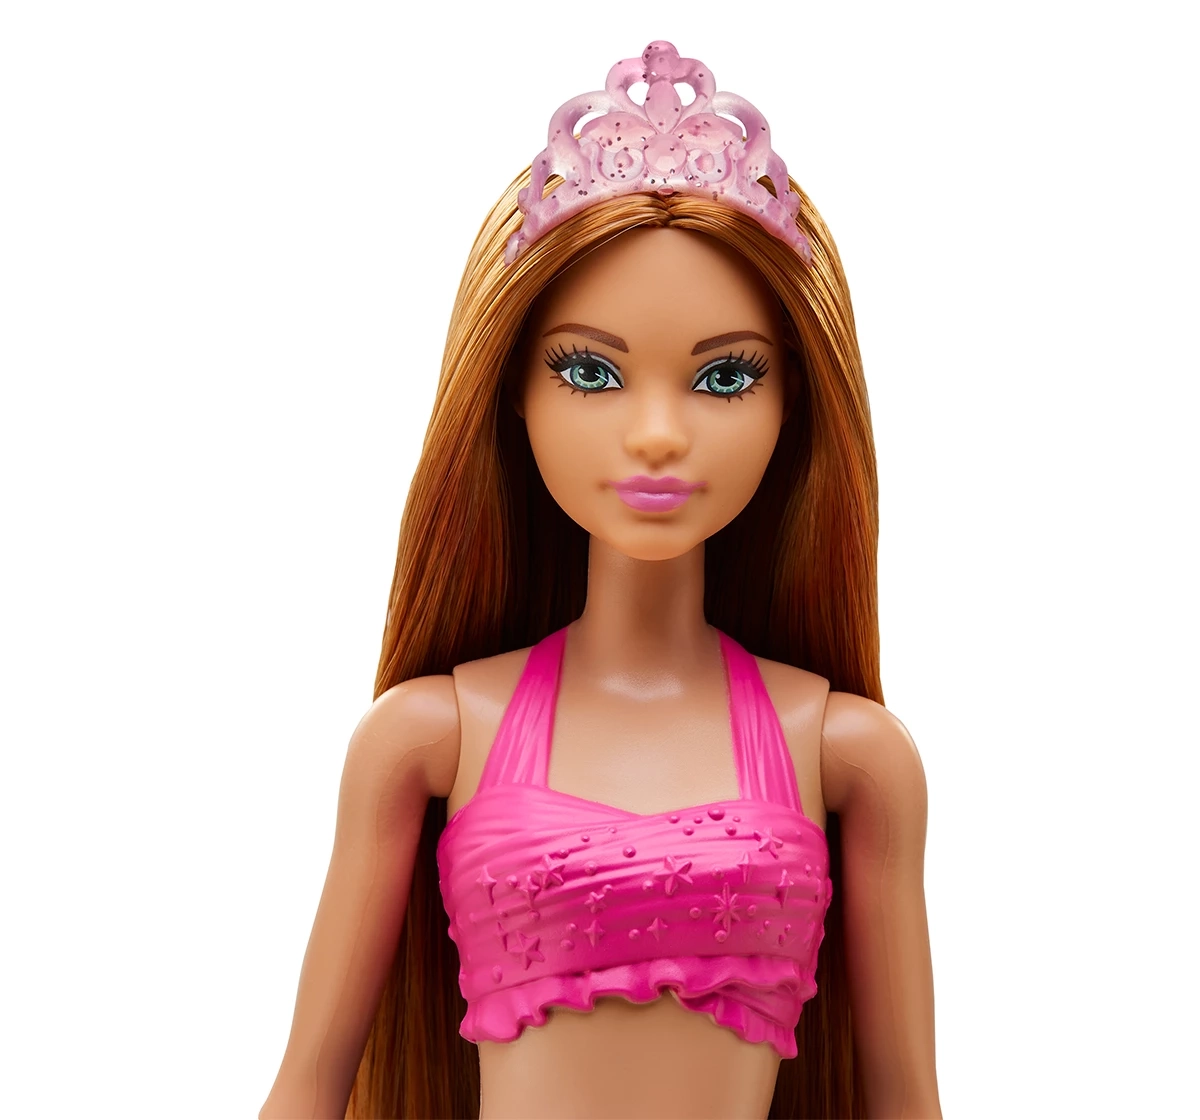 Chelsea Mermaid Dress Up Barbie® - Fun Stuff Toys